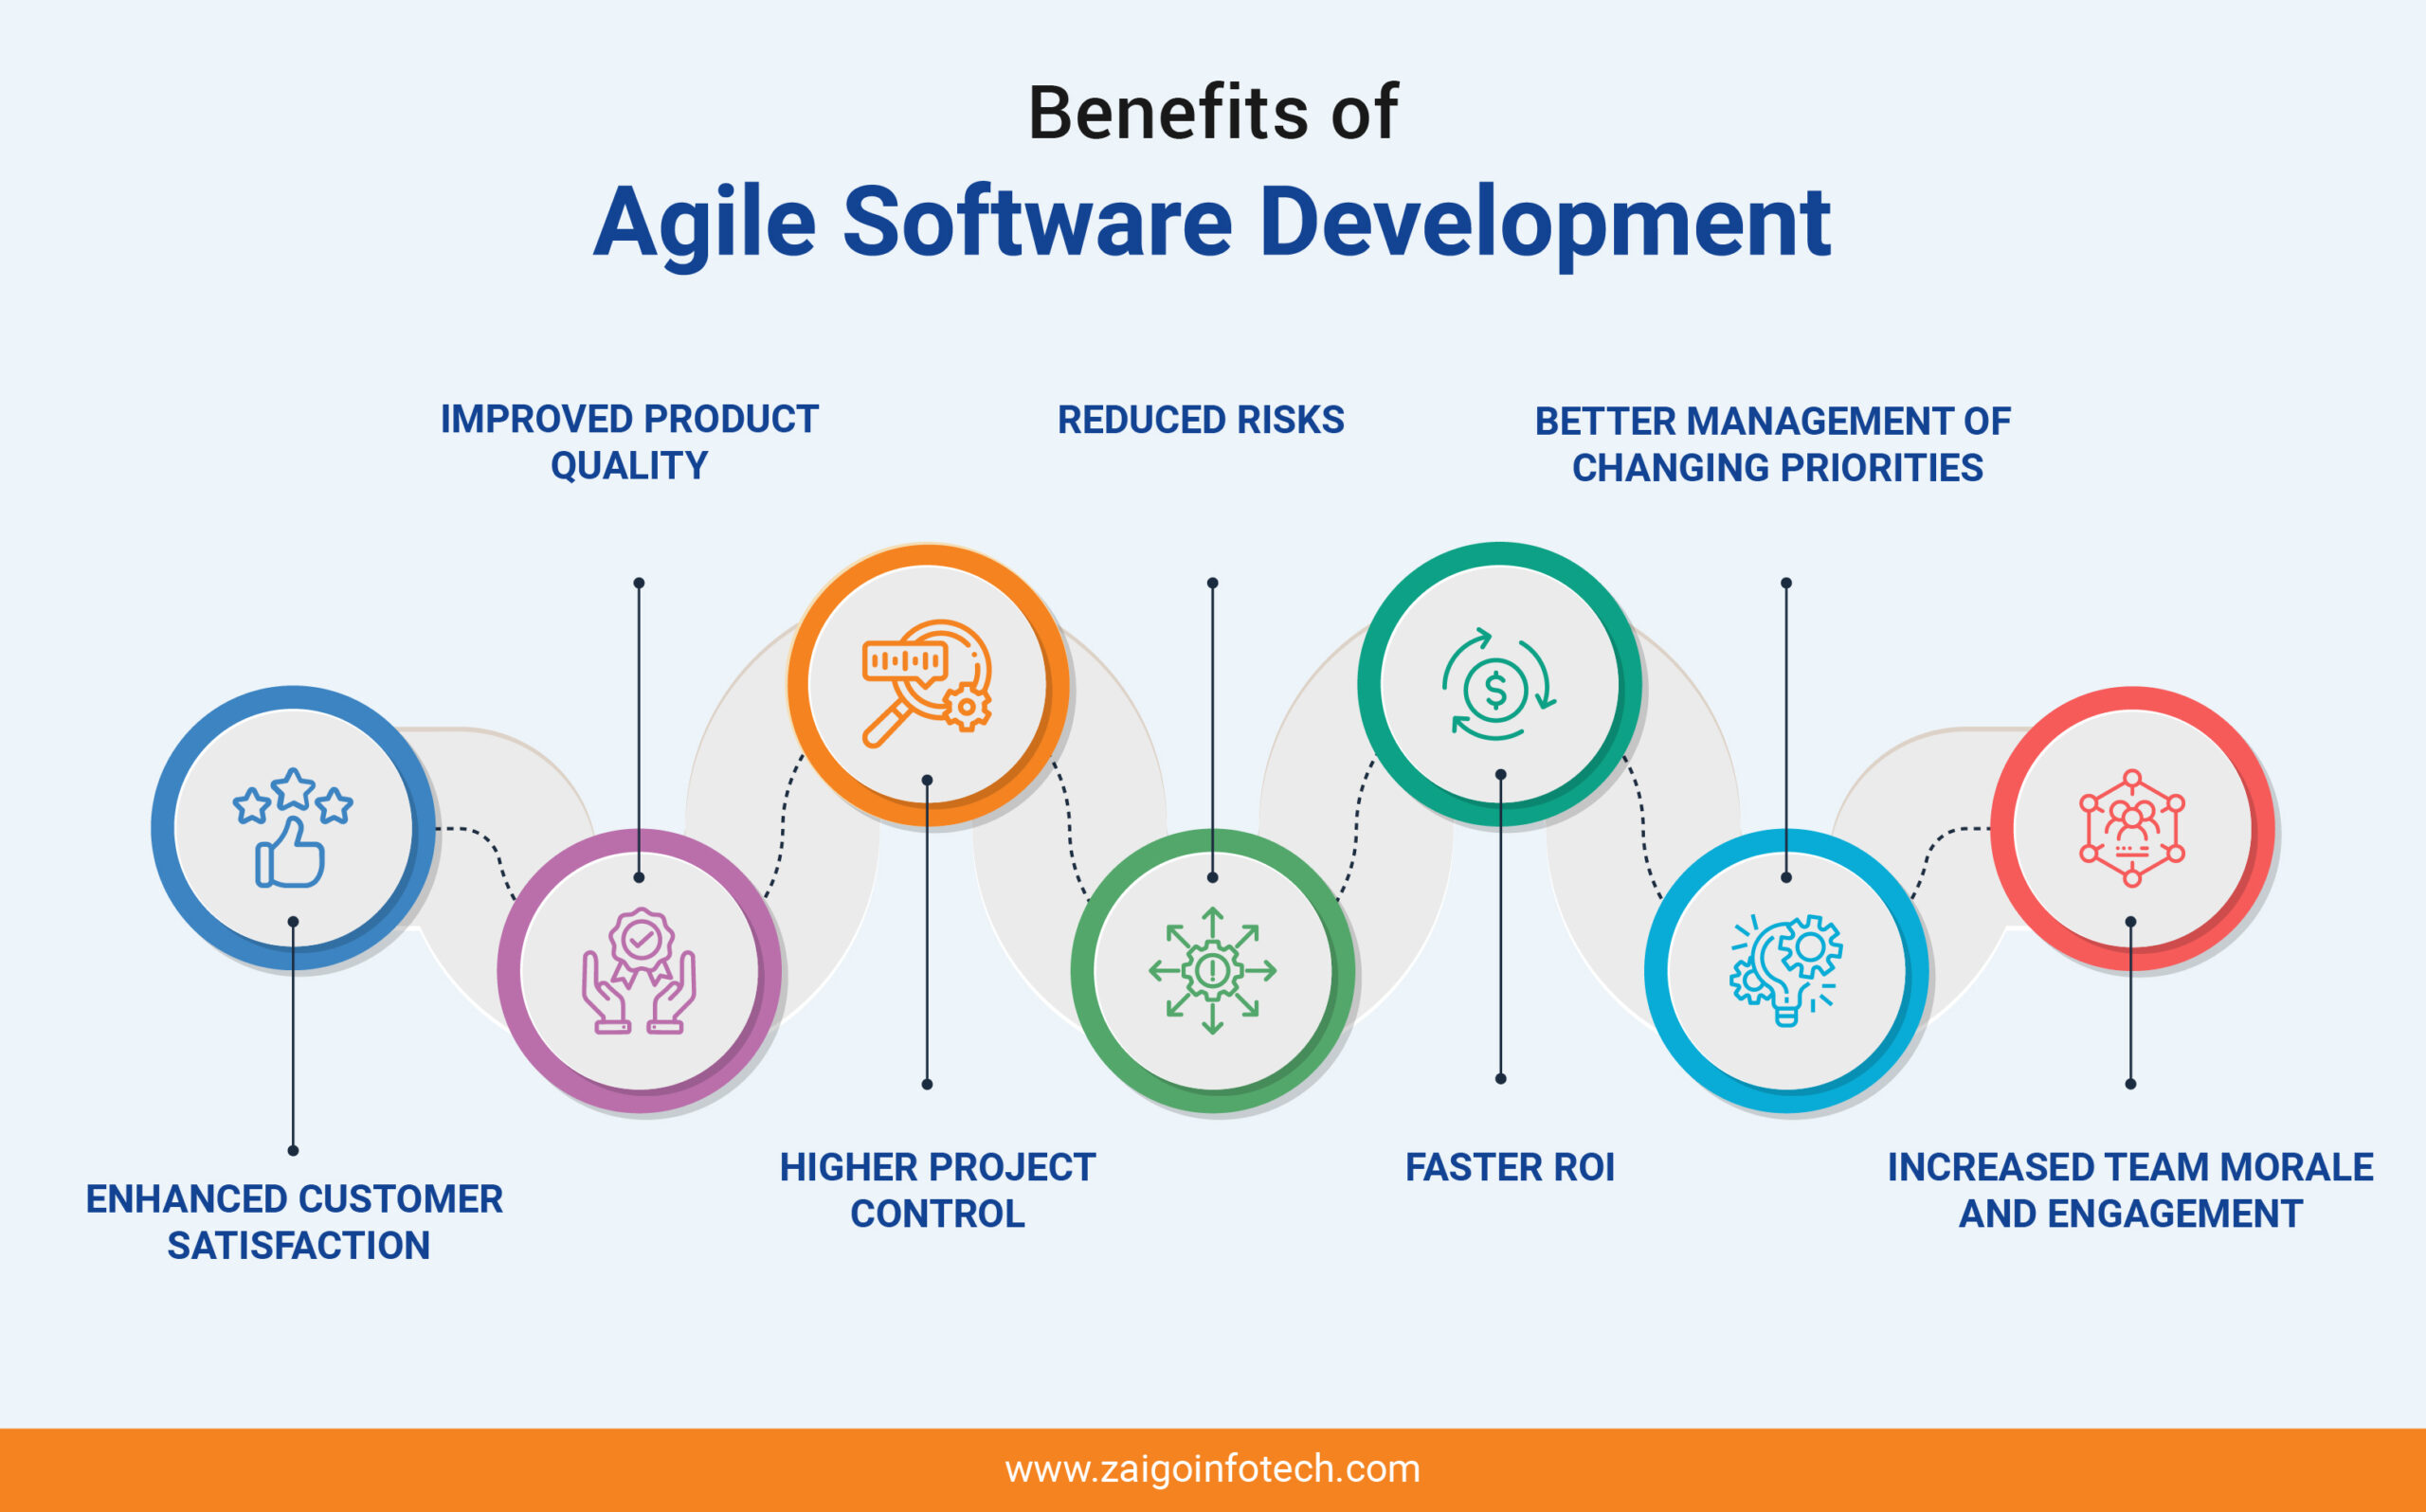 Benefits of Agile Software Development